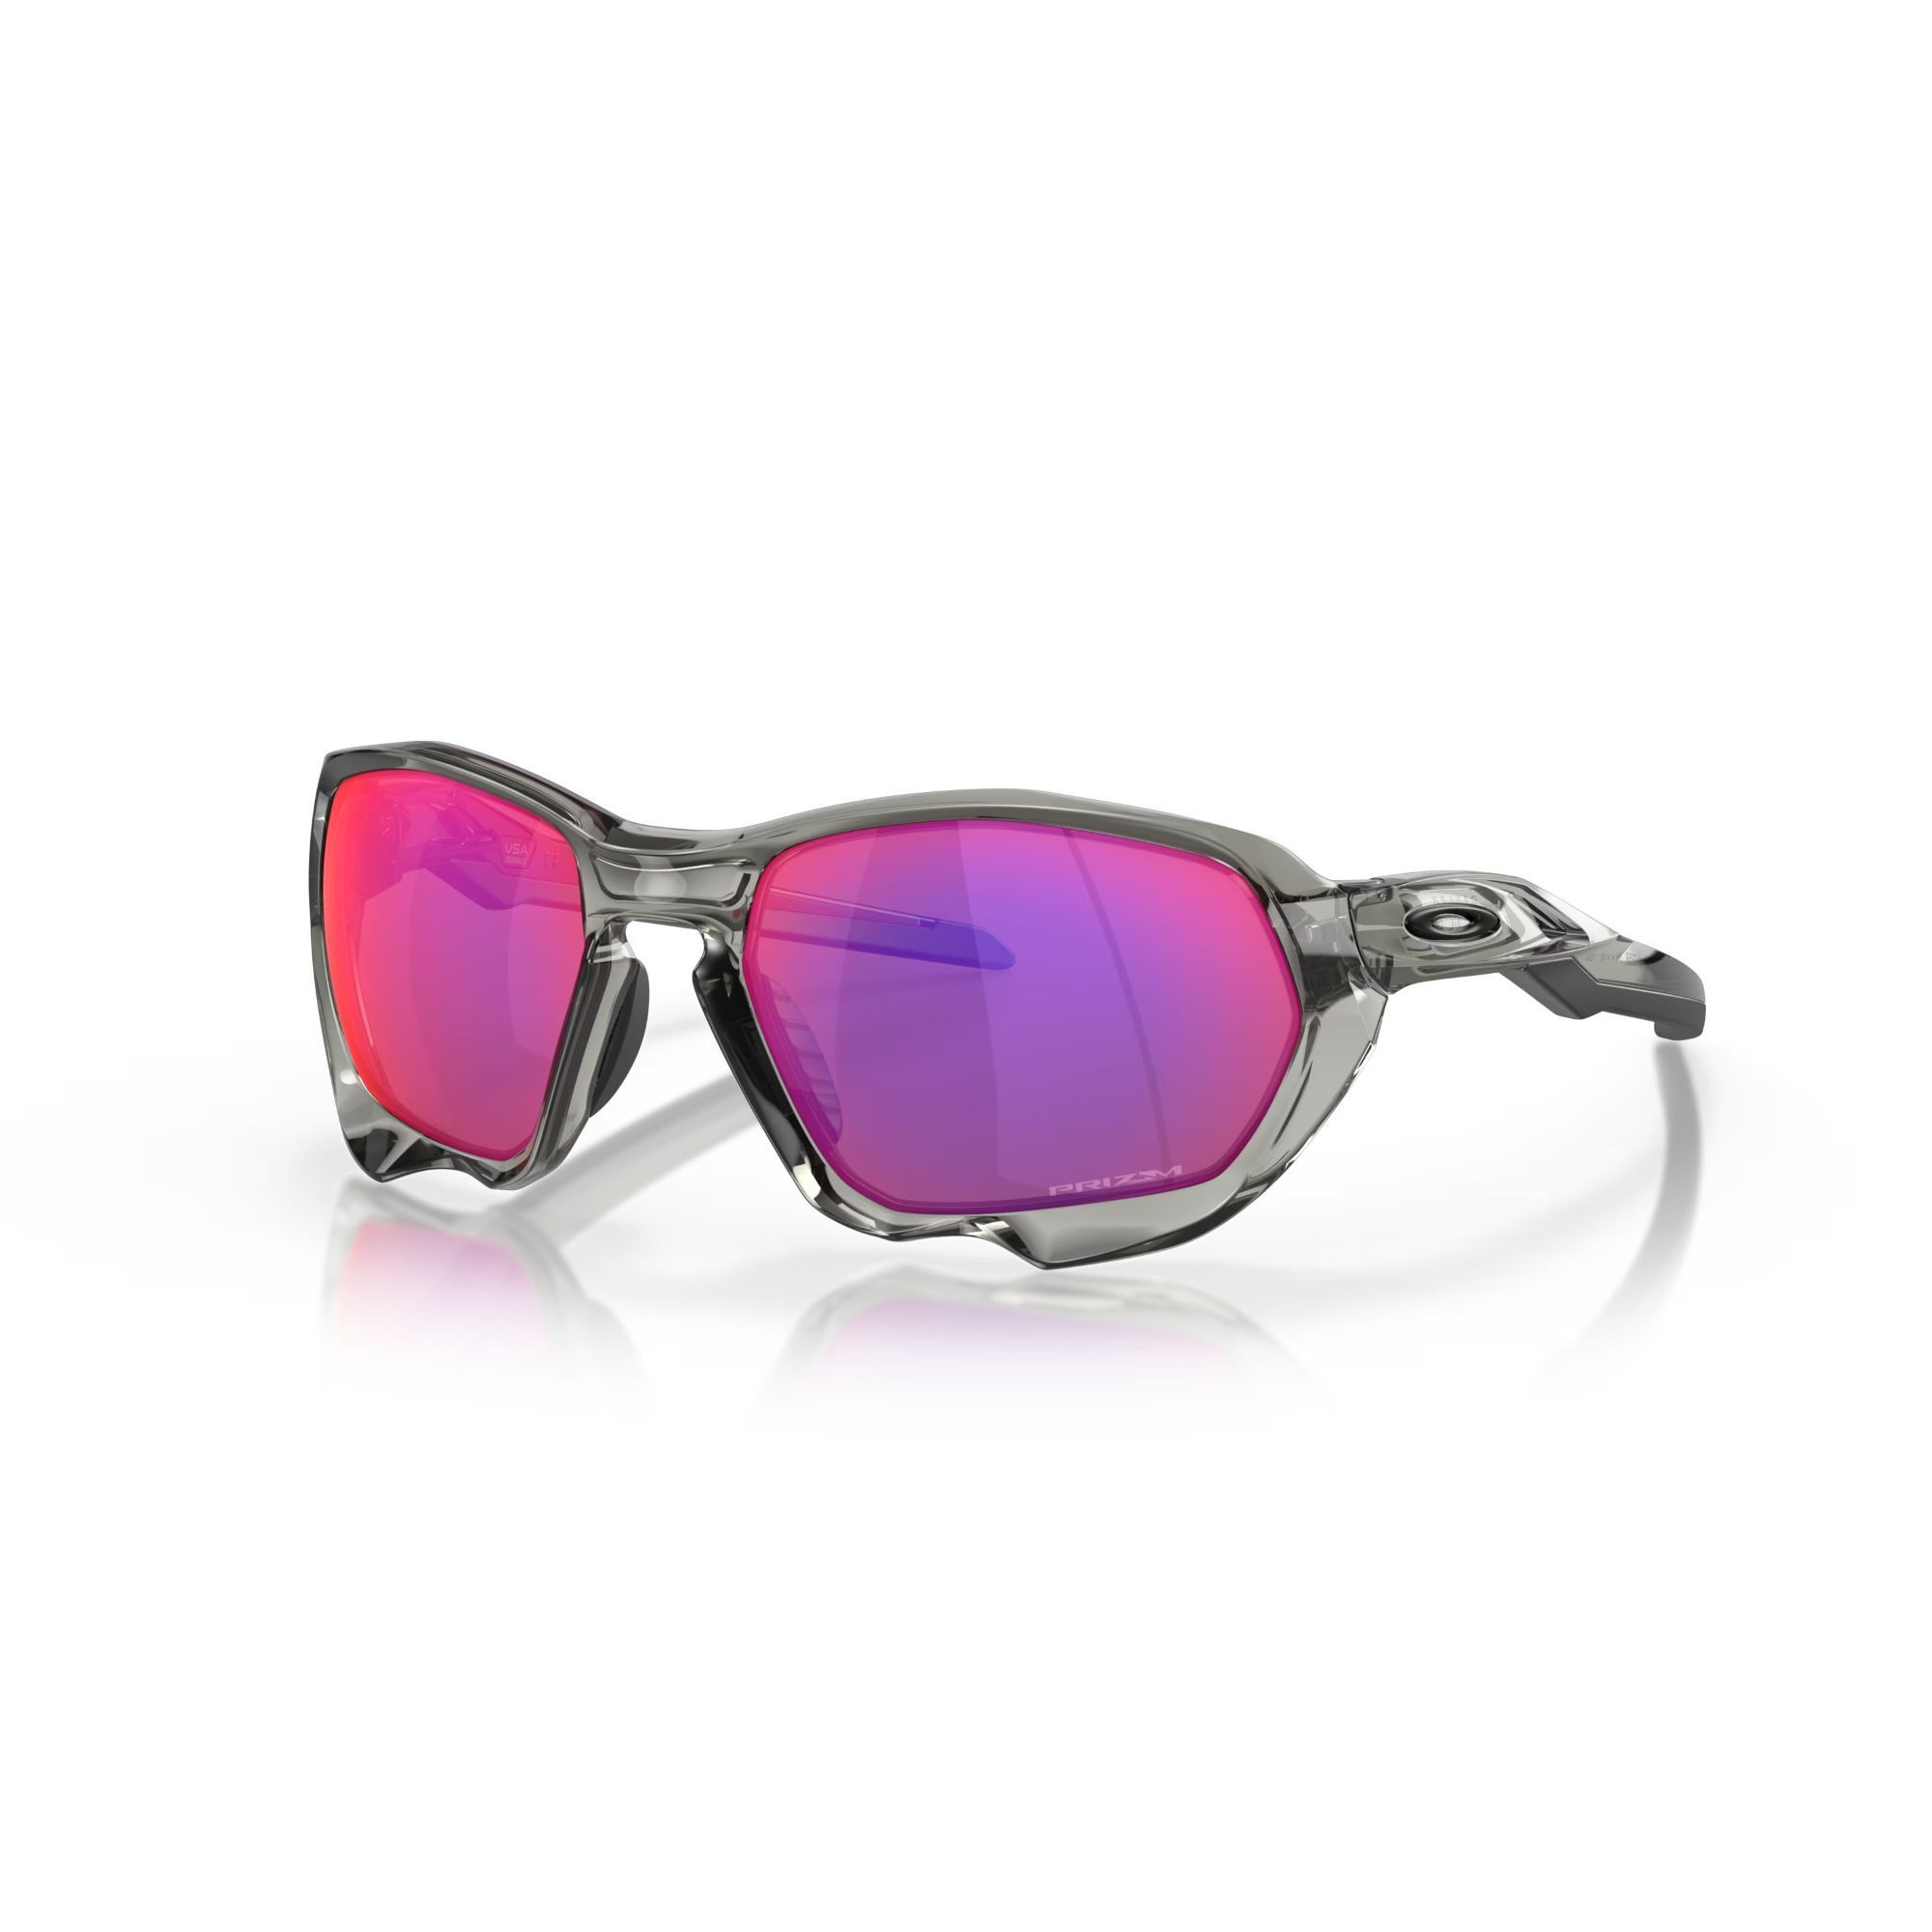 Plazma Sunglasses OO9019-03 size 59